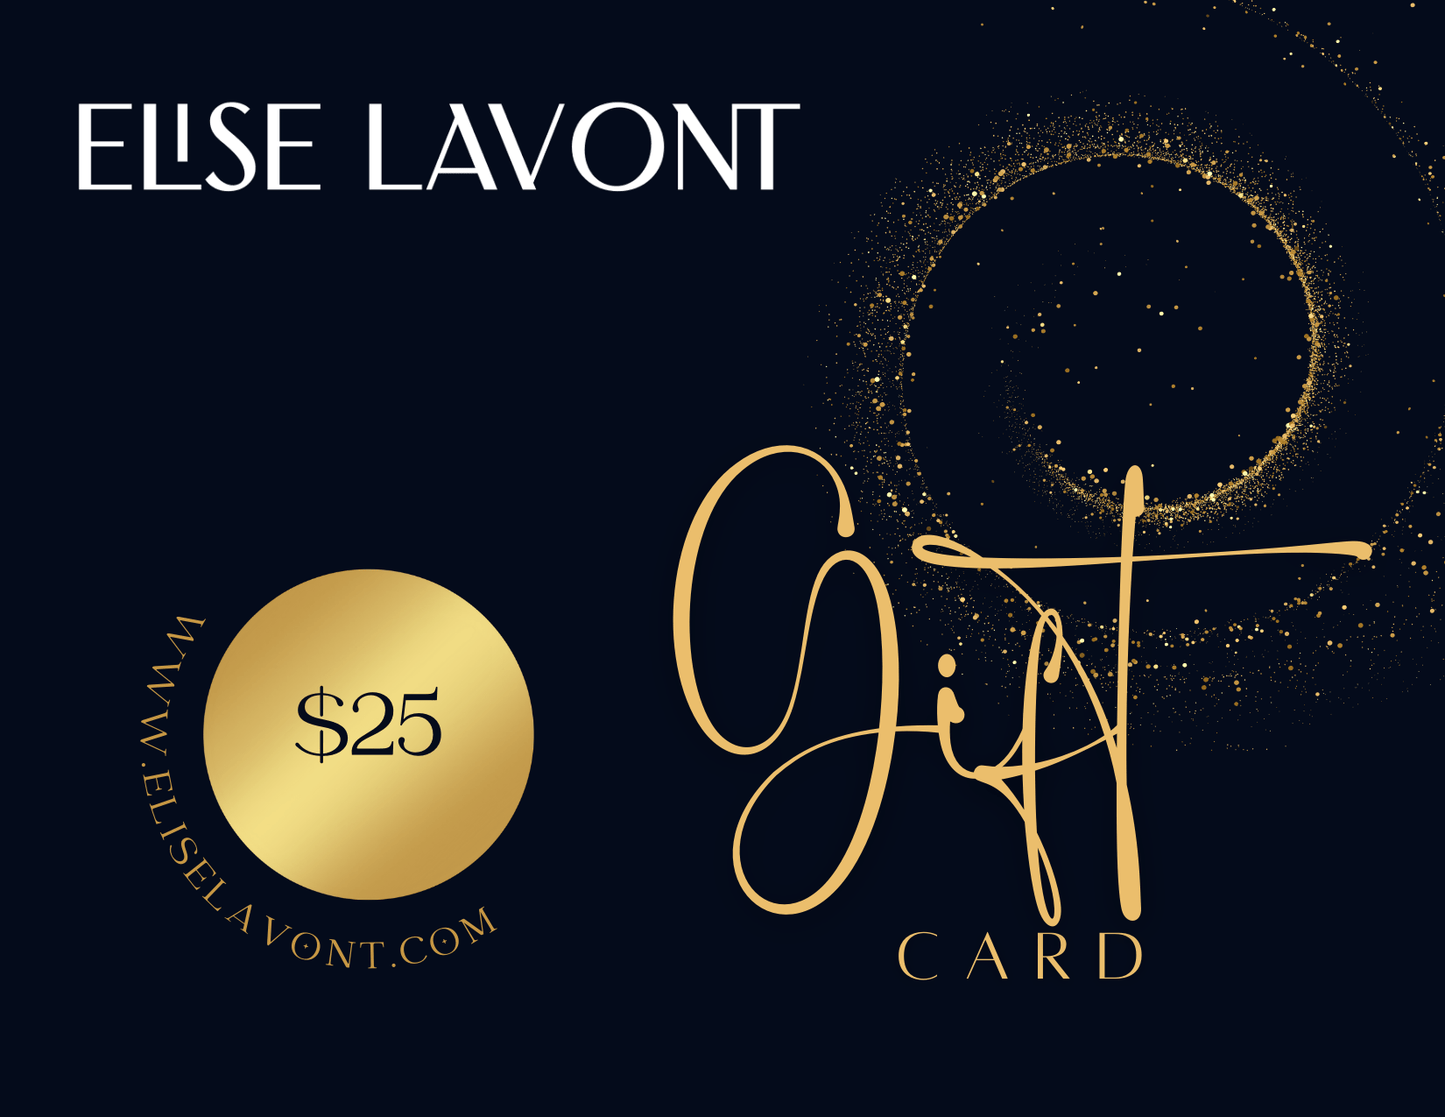 Elise Lavont Gift Card - Elise Lavont